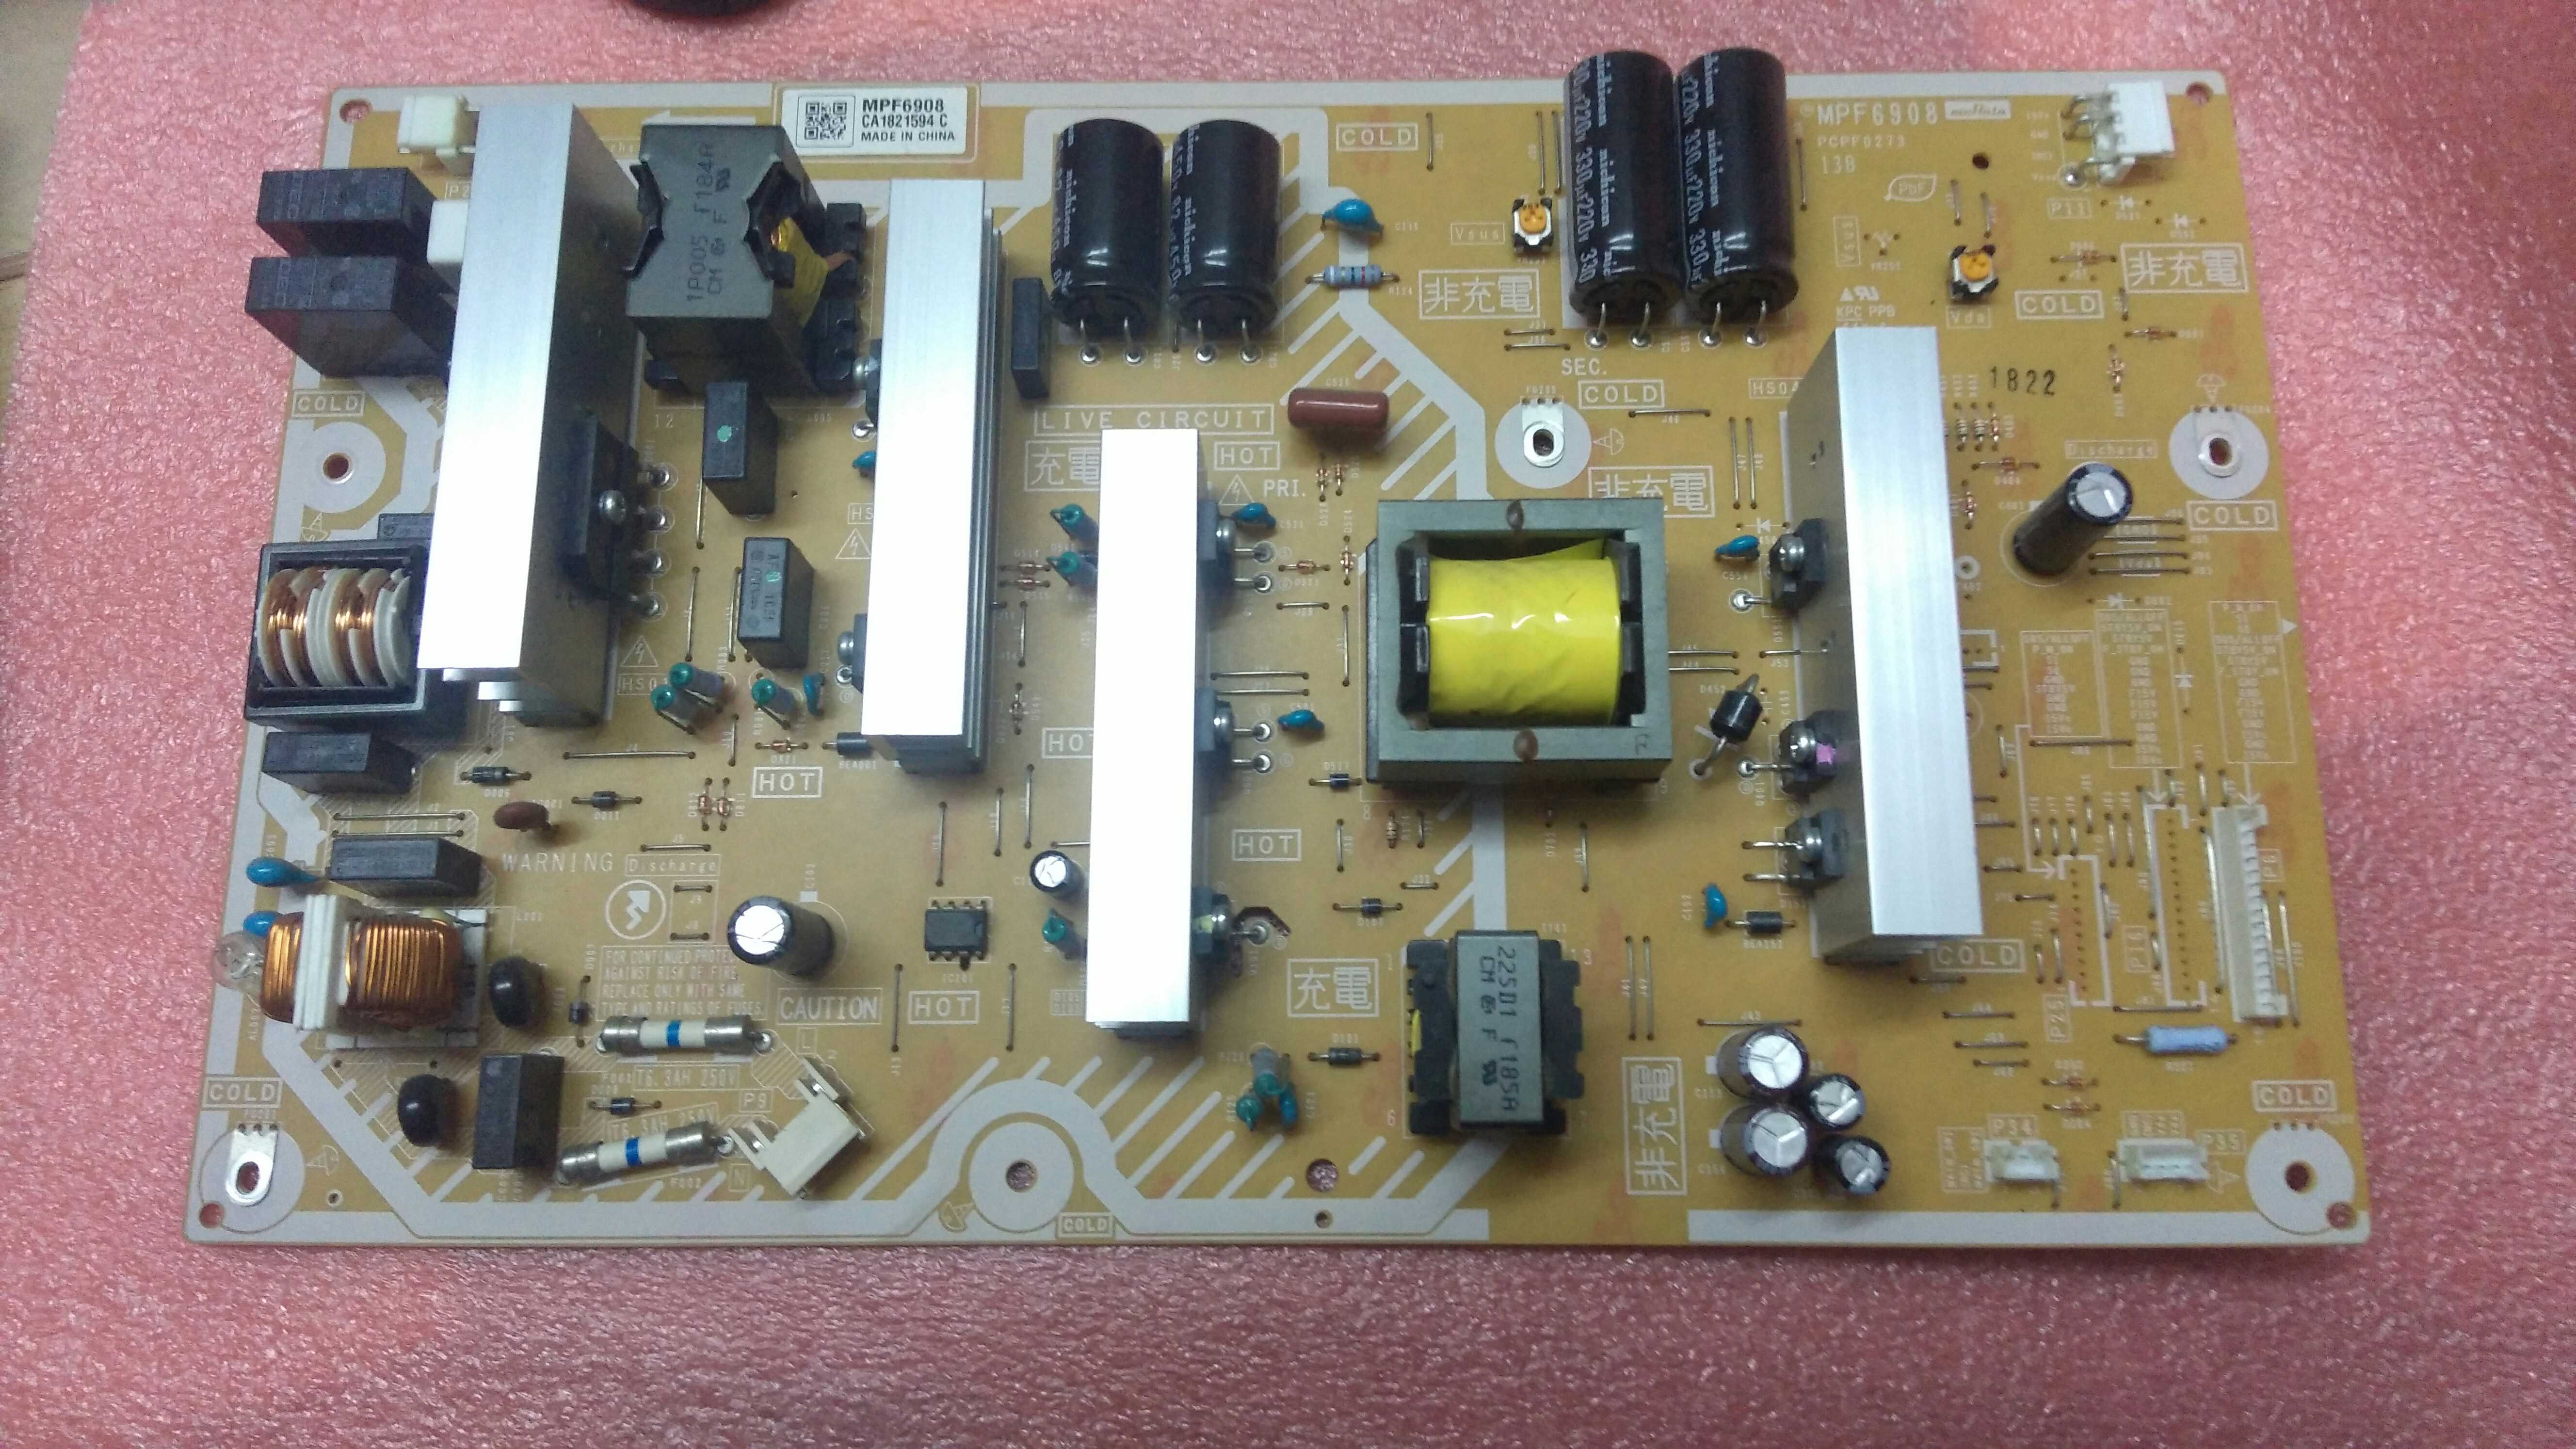 mpf6908 power supply board